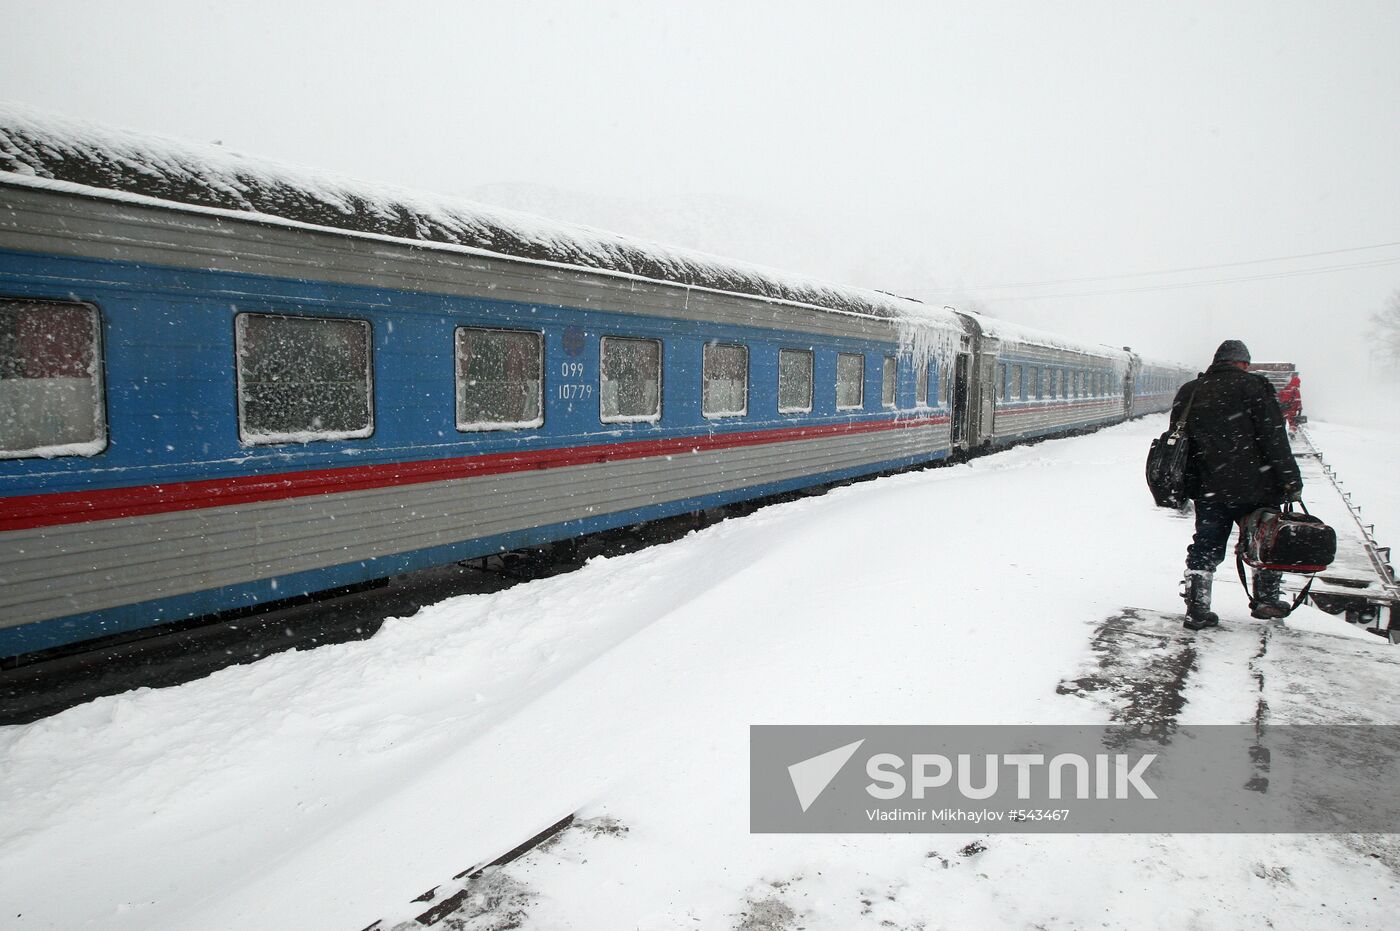 Rescue train at a Sakhalin railway station